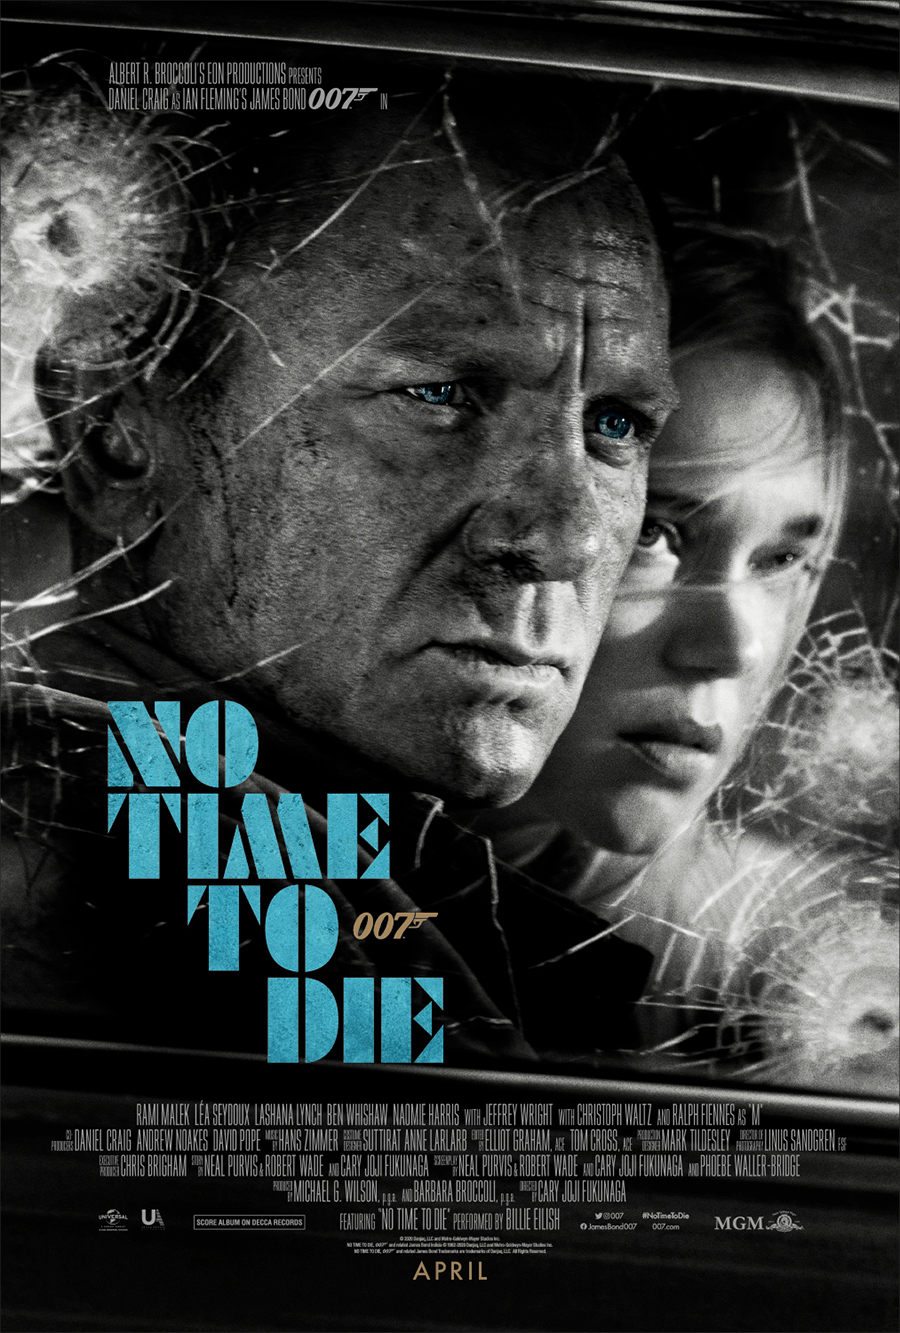 Bond 25 - NO TIME TO DIE